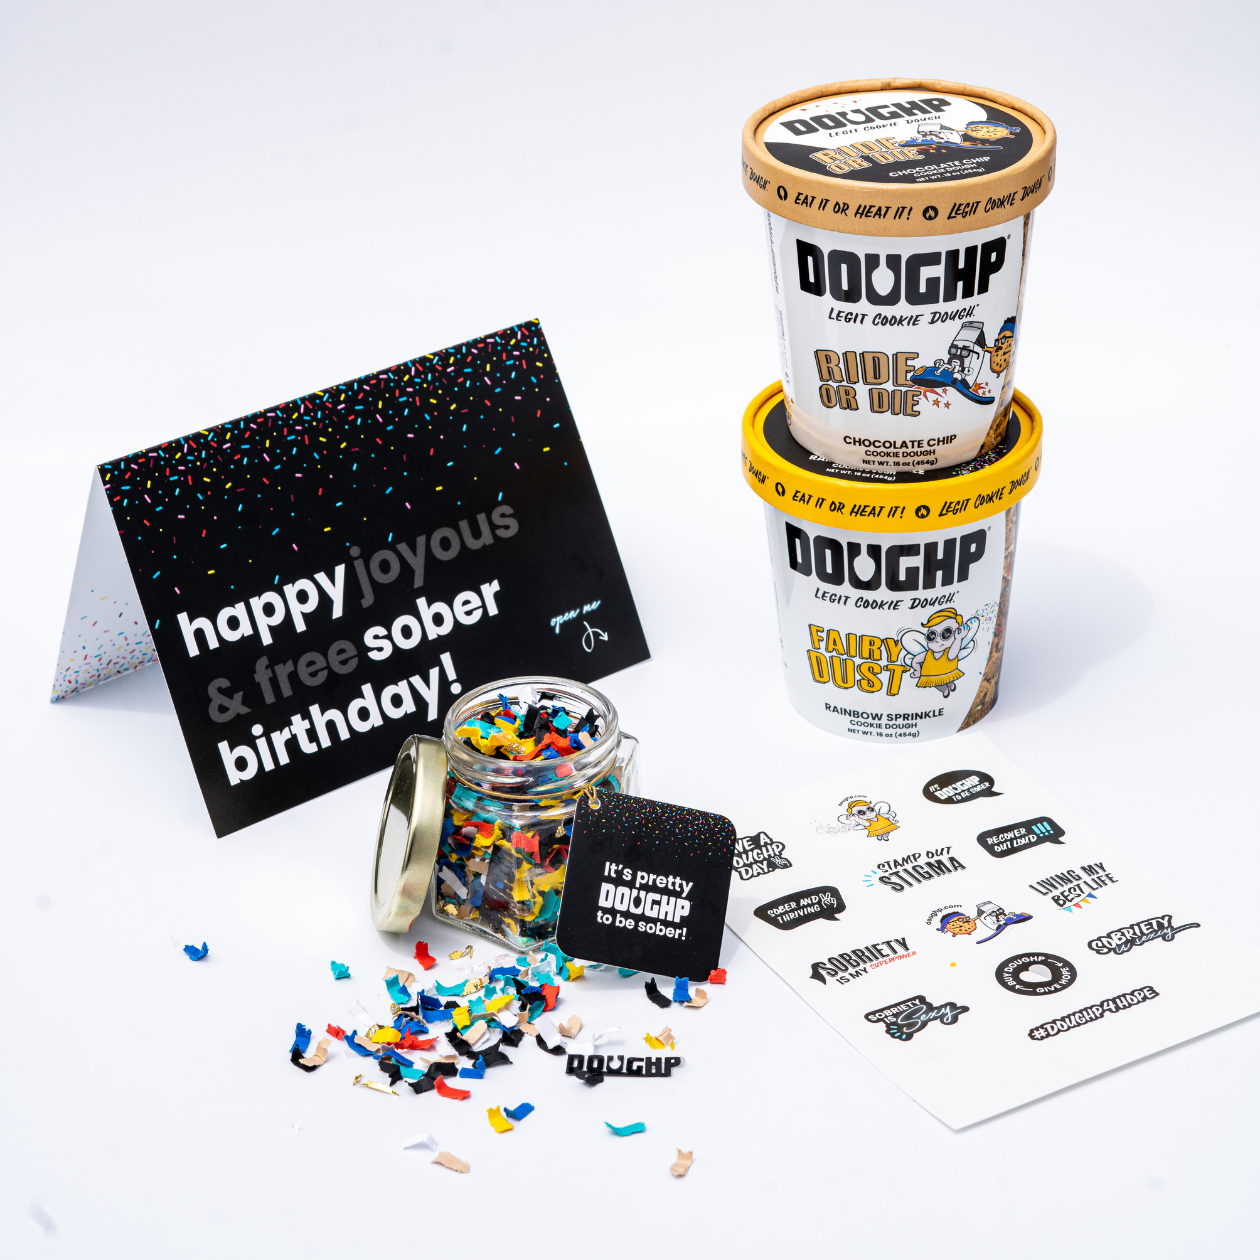 Sober birthday box with Doughp